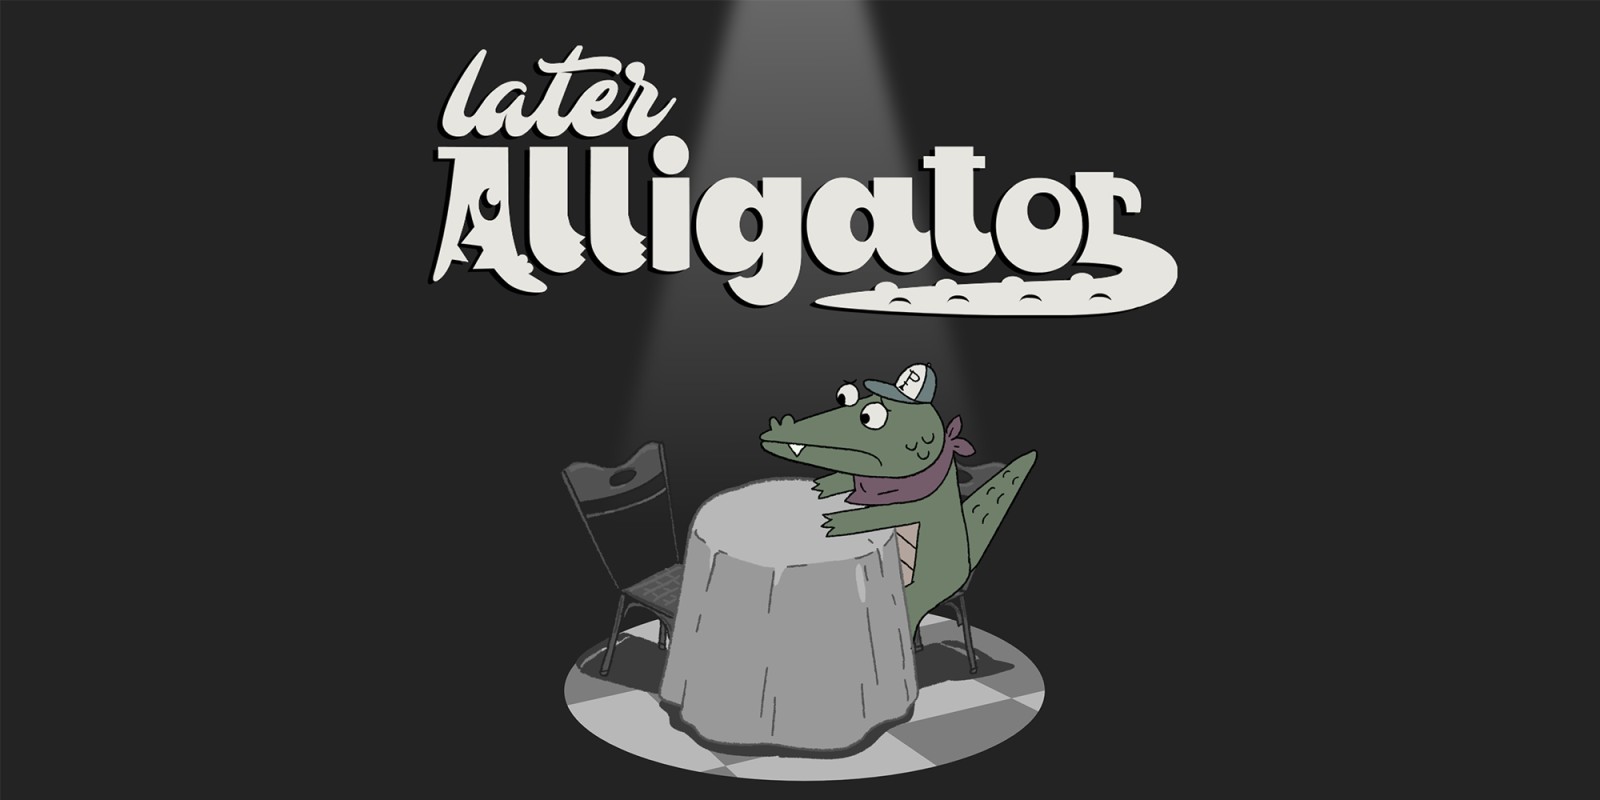 Later Alligator